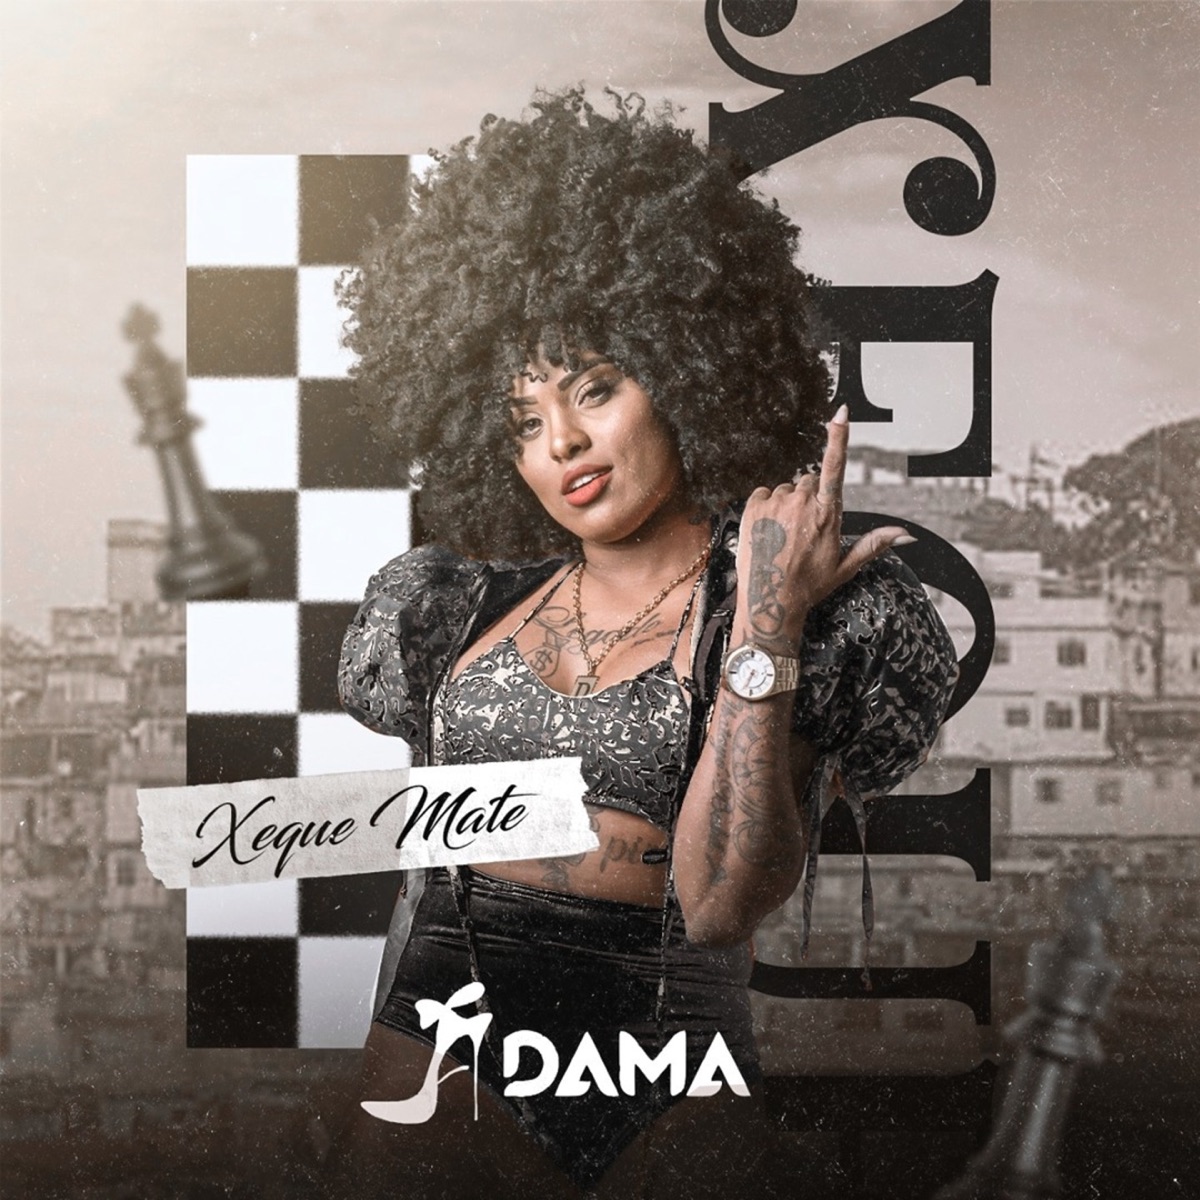 Soca Fofo Vs Soca Forte - Single - Album by Dj Thebest & A Dama - Apple  Music